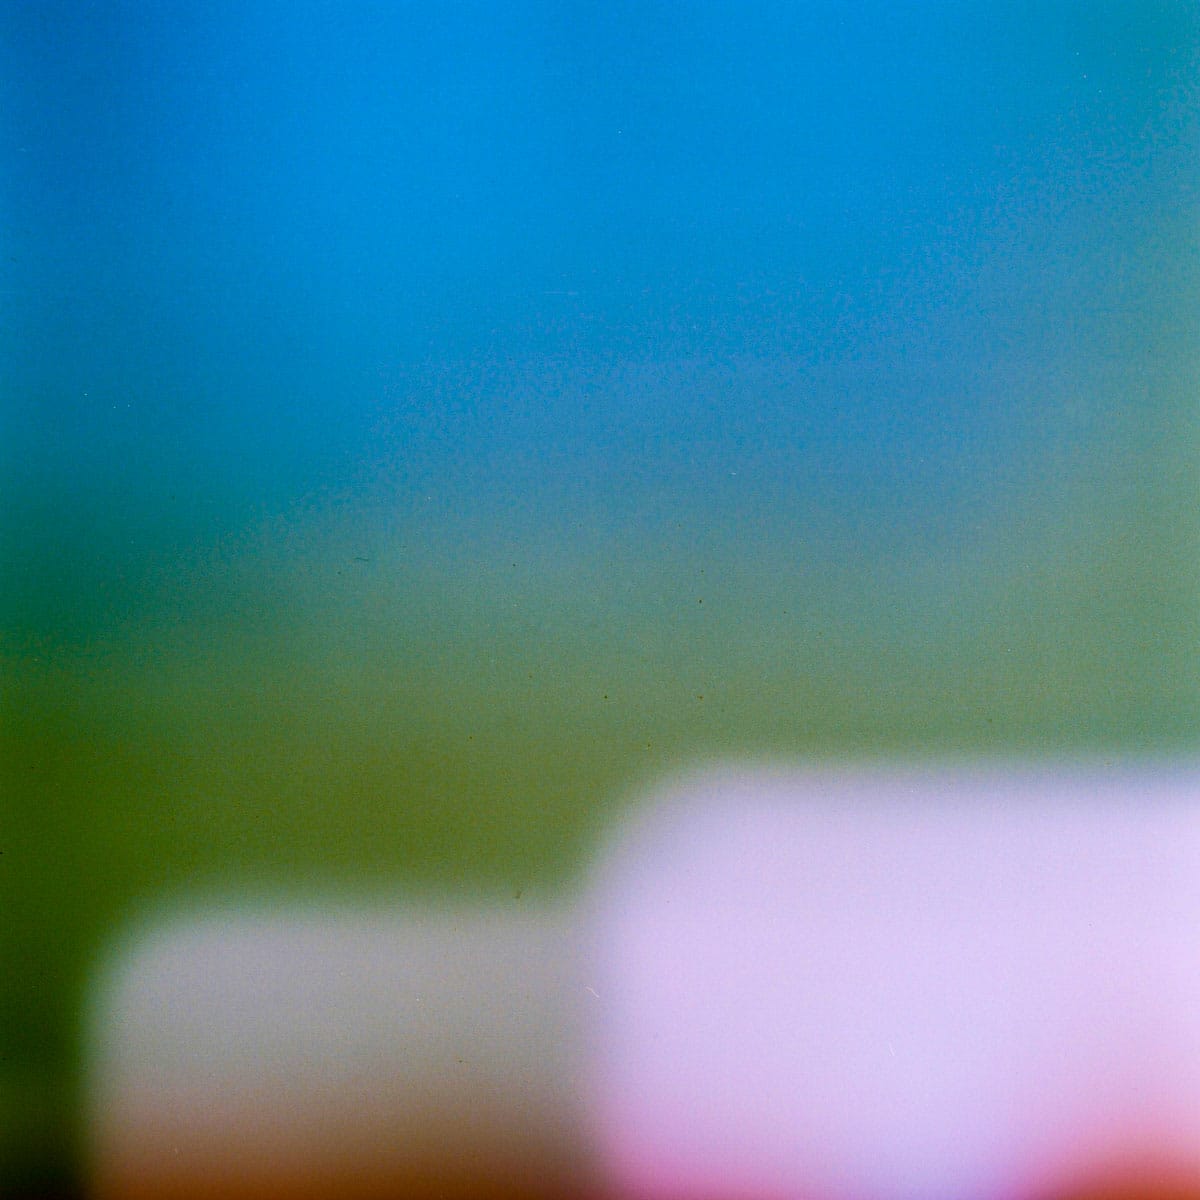 Cubed 04 - Shot on Lomography Color Negative 800 at EI 800 - Color negative film in 120 format as 6x6